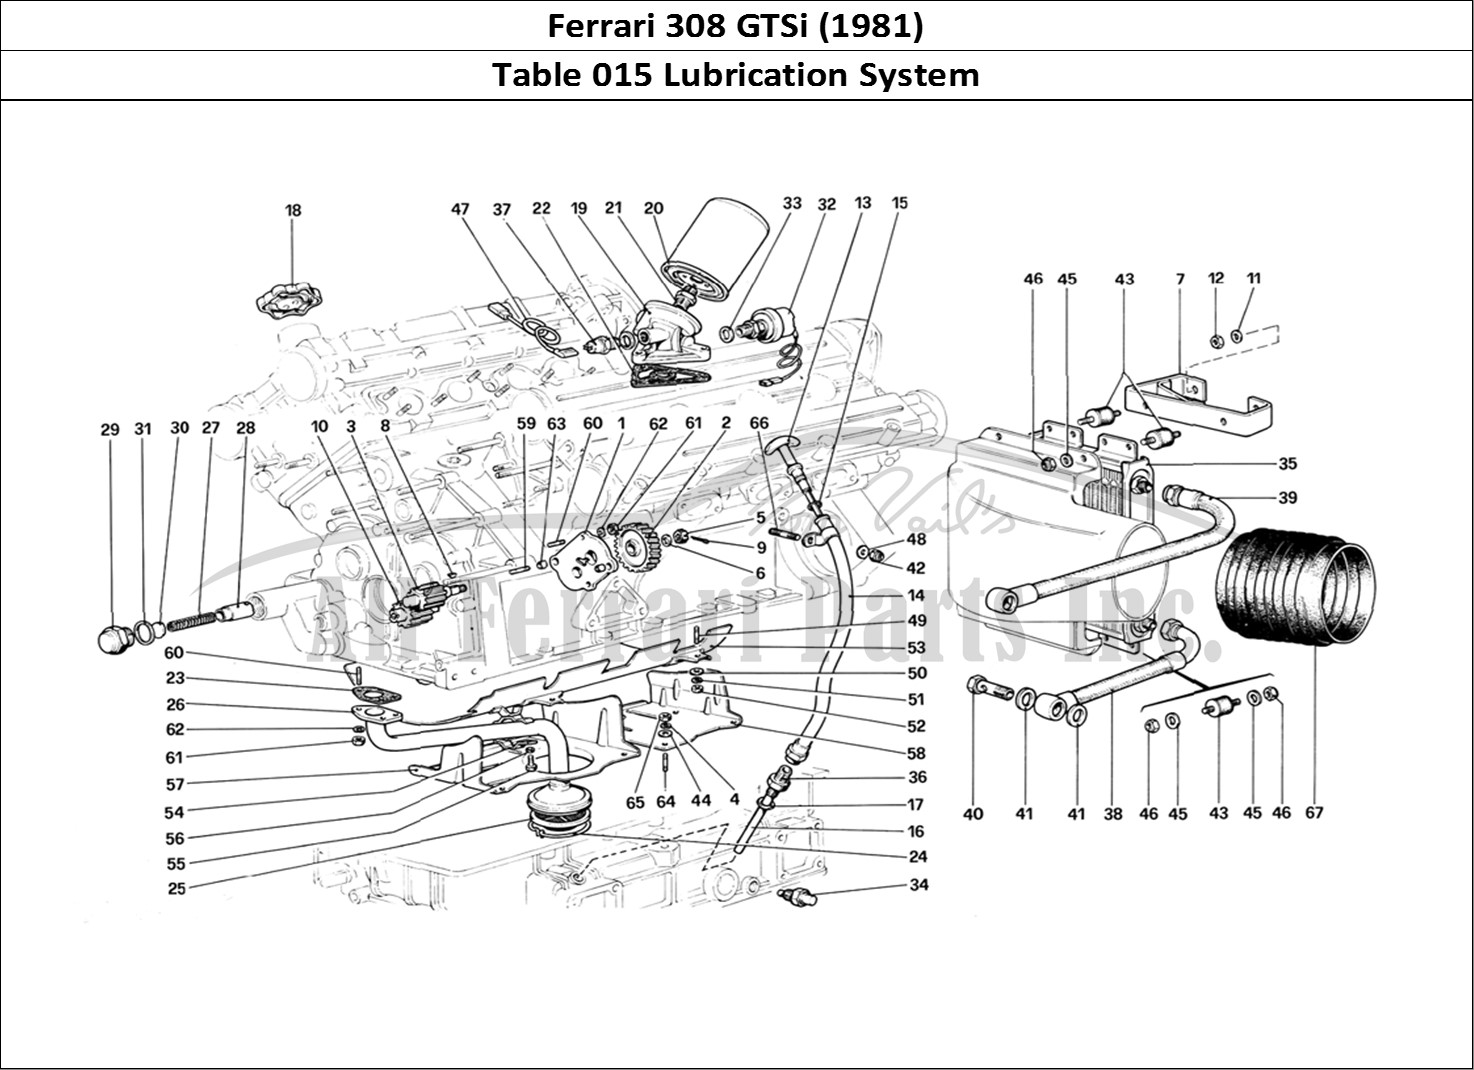 Ferrari Parts Ferrari 308 GTBi (1981) Page 015 Lubrication System